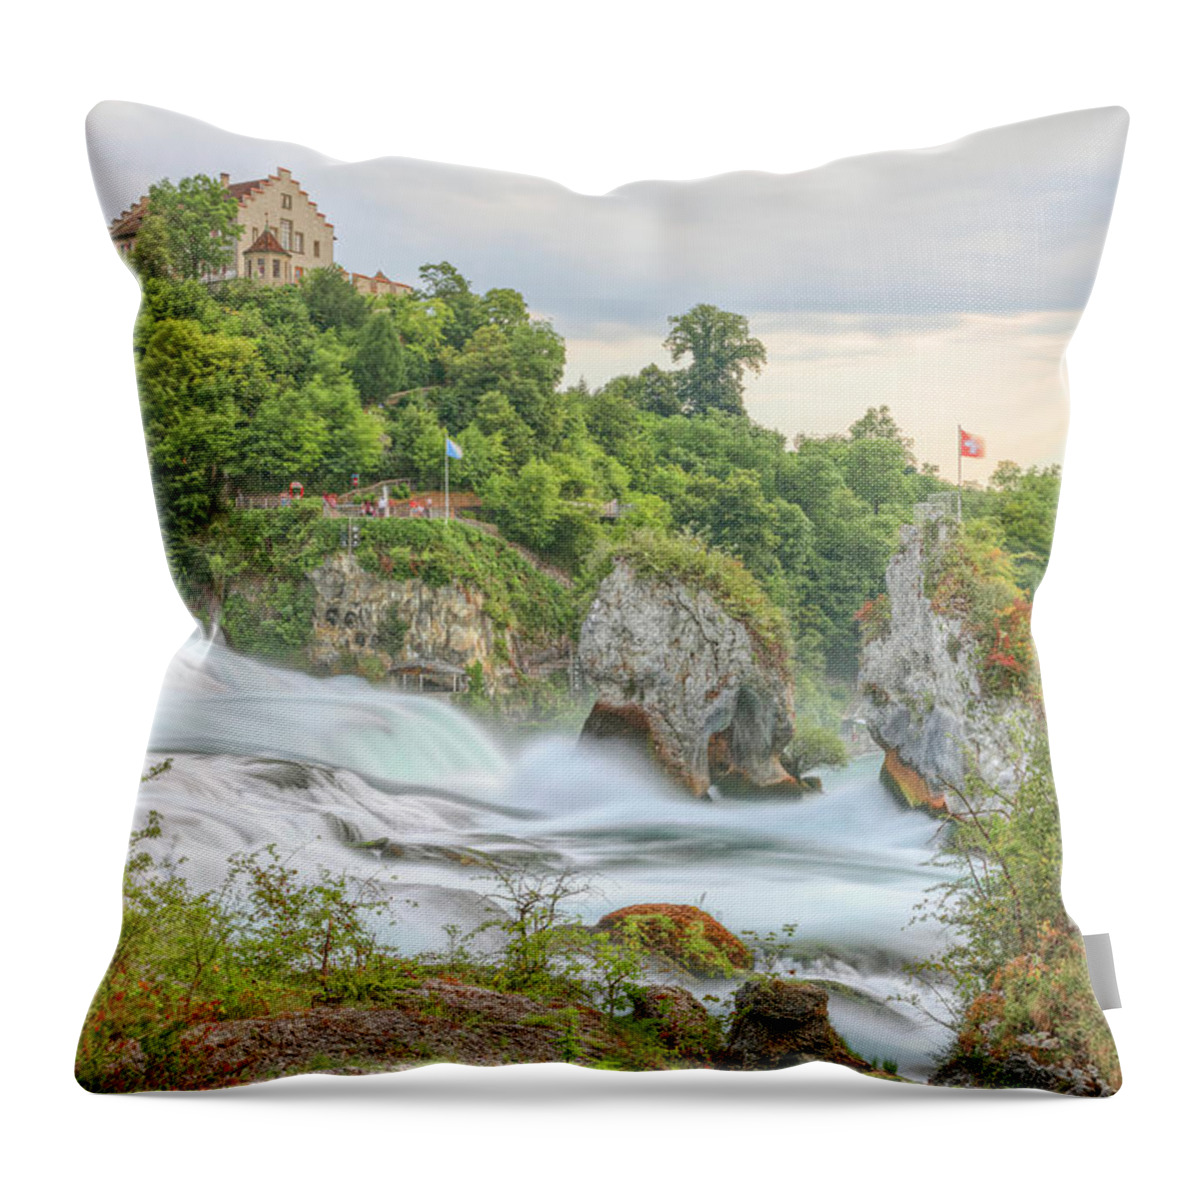 Rhine Falls Throw Pillow featuring the photograph Rhine Falls - Switzerland #2 by Joana Kruse